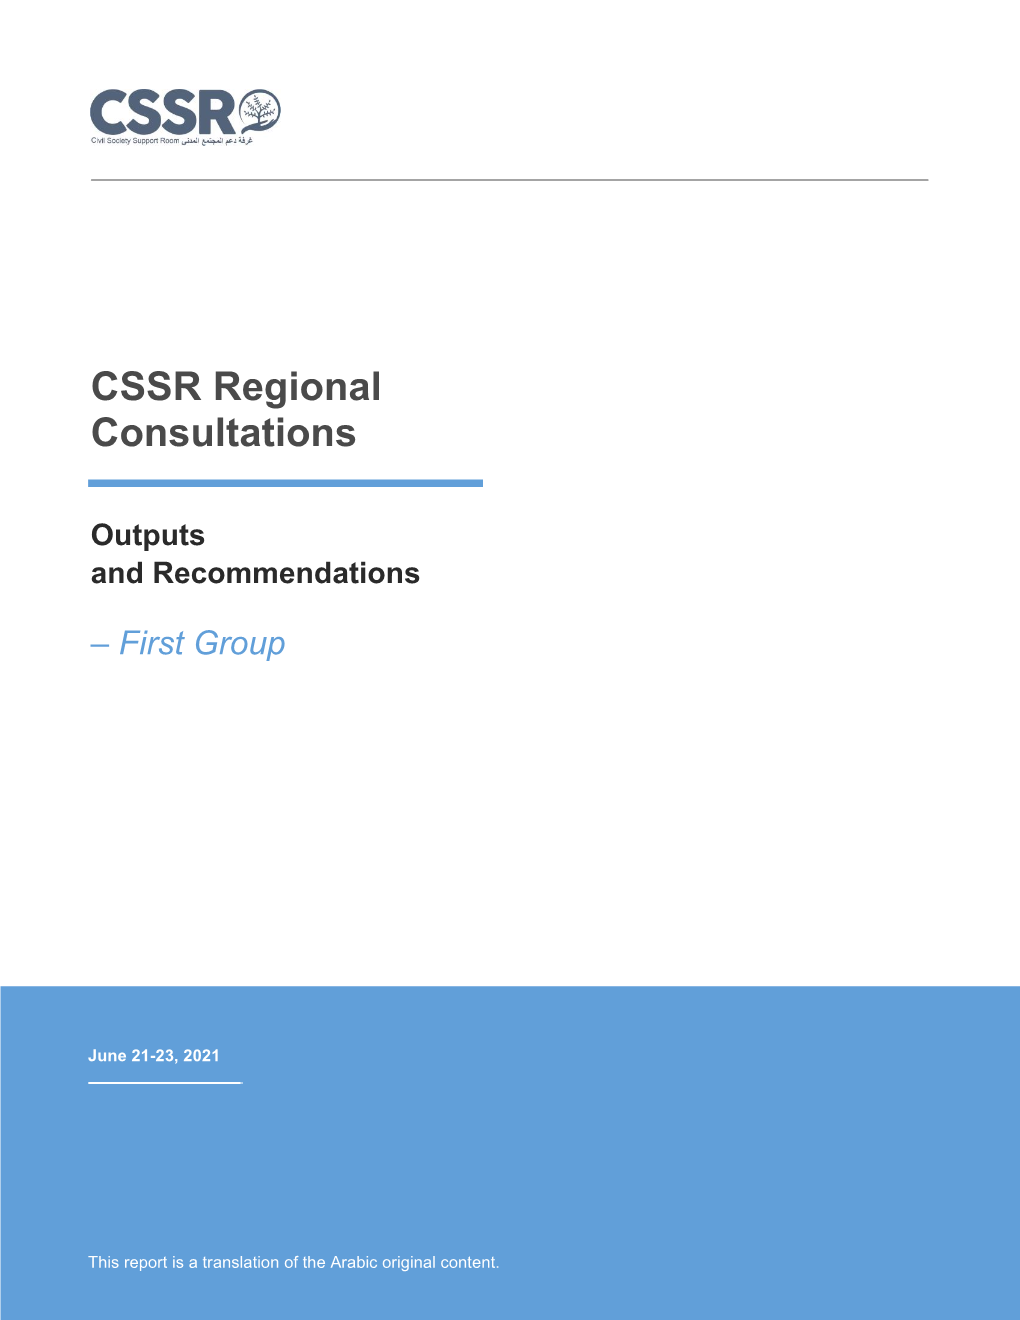 CSSR Regional Consultations